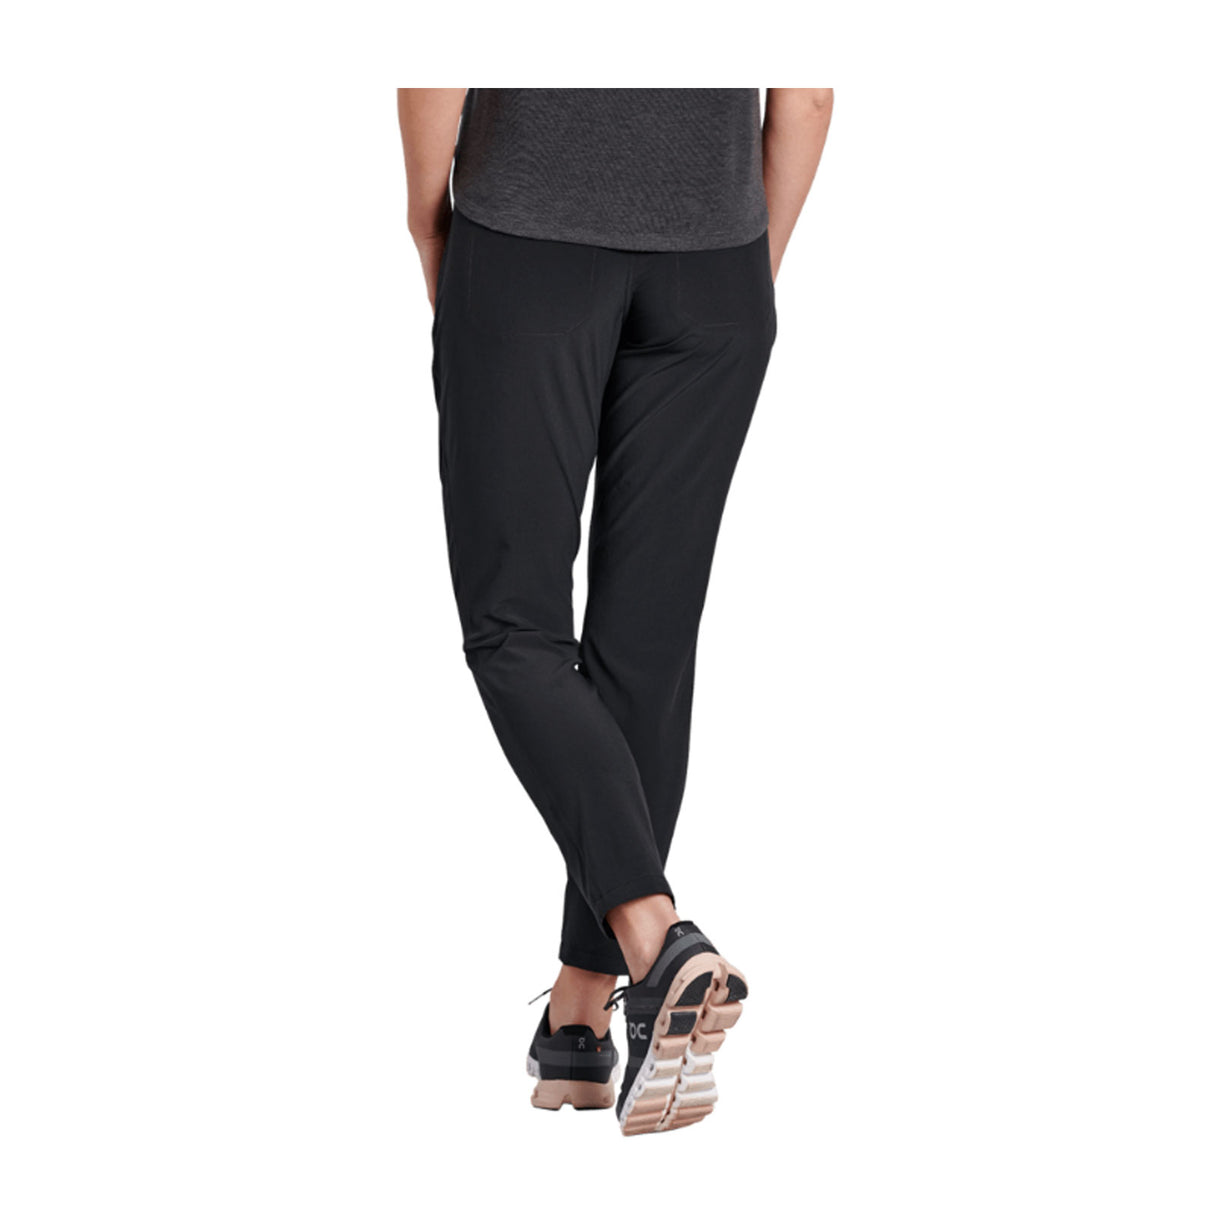 Kuhl Vantage Pant (Women) - Black Apparel - Bottom - Pant - The Heel Shoe Fitters